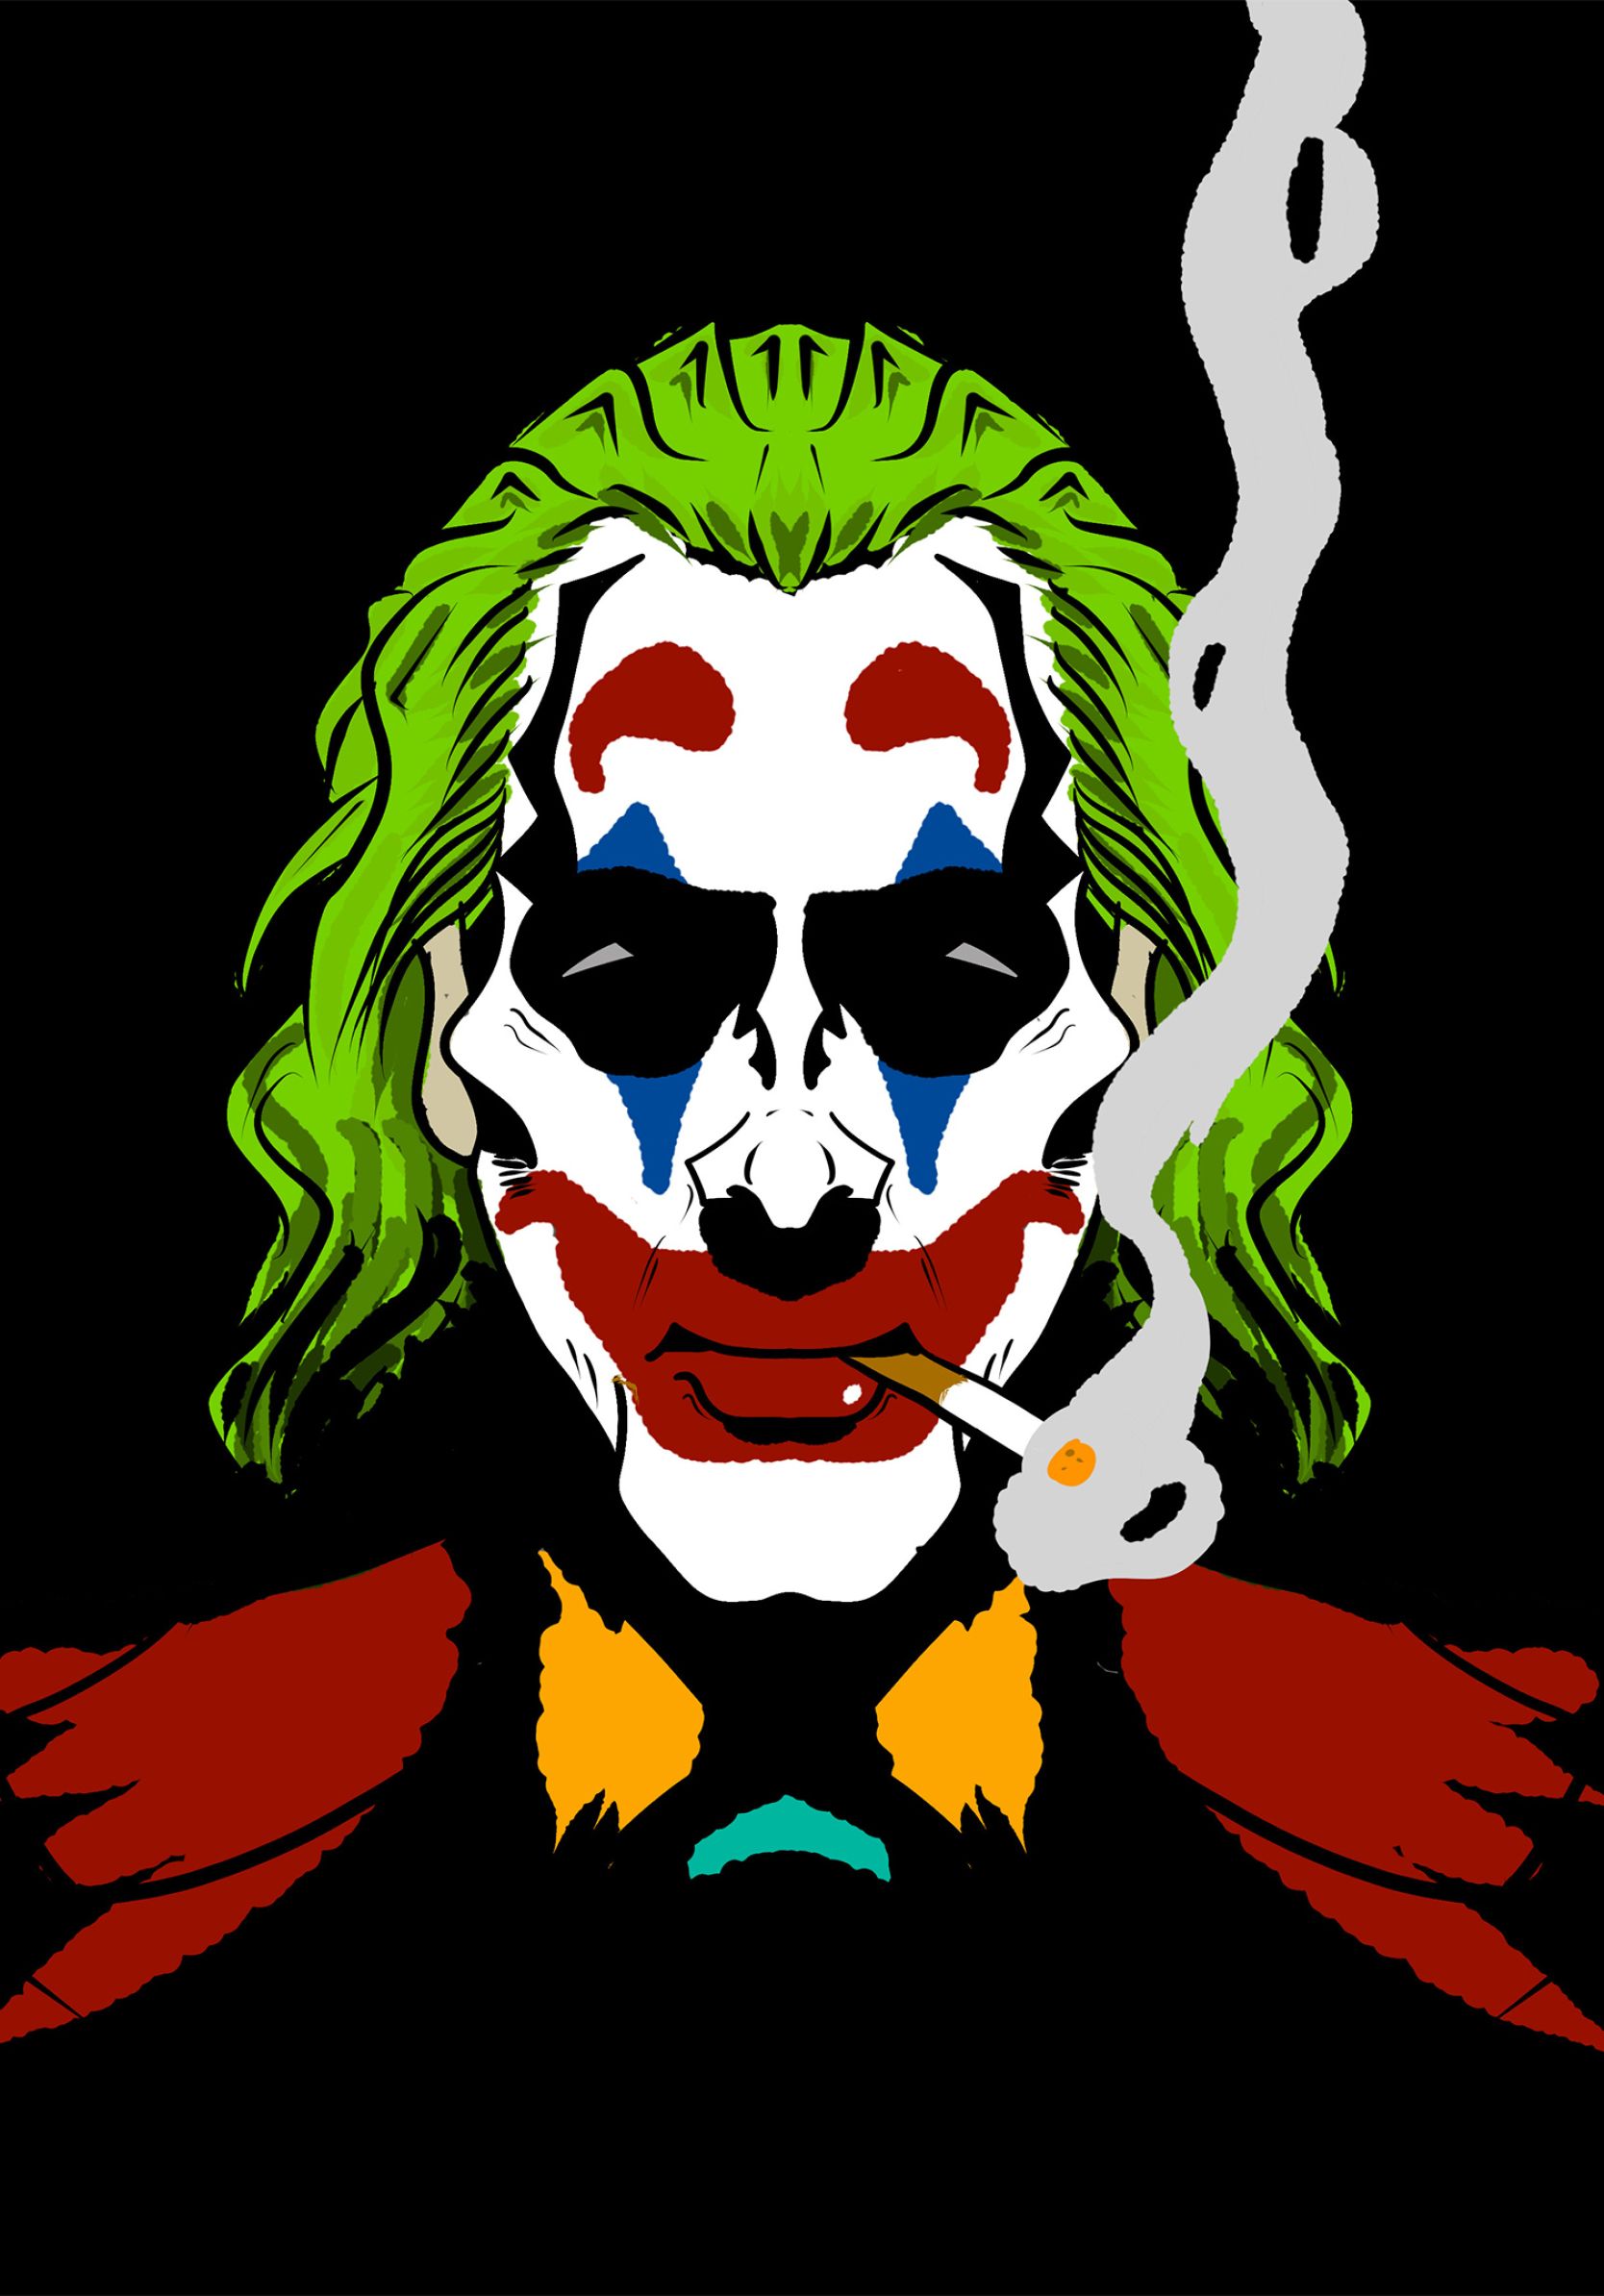 Joker Smoking 1668x2388 Resolution Wallpaper, HD Minimalist 4K Wallpaper, Image, Photo and Background